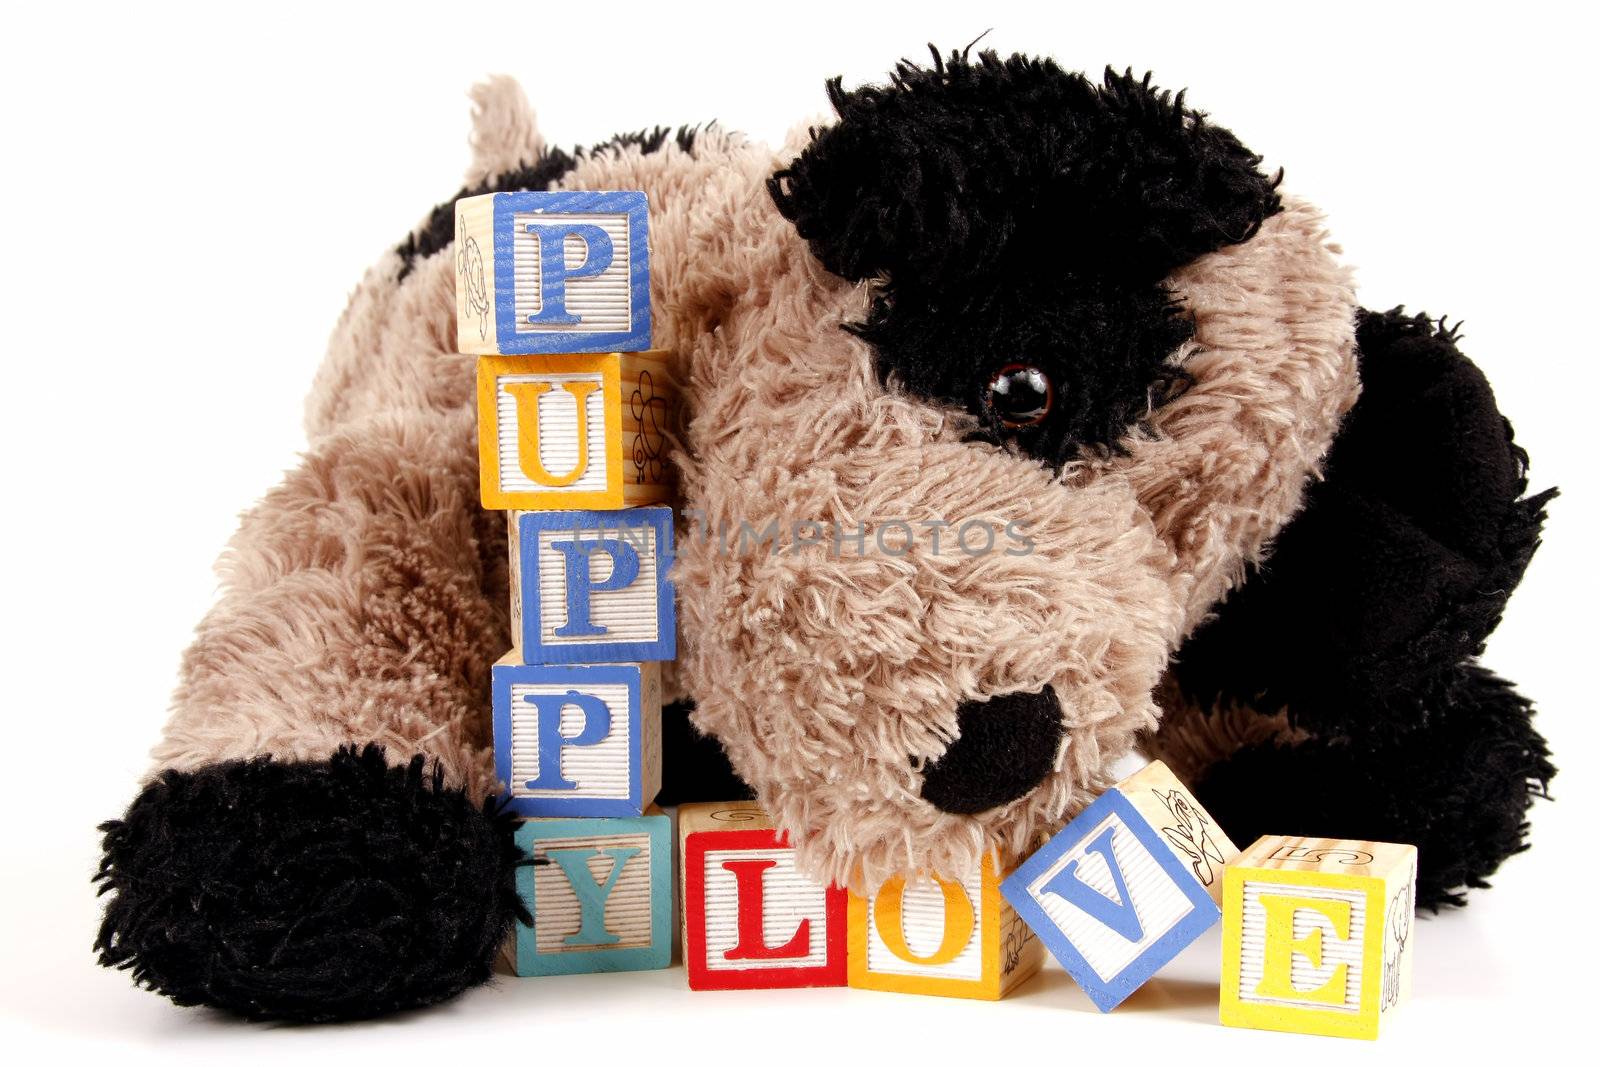 Stuffed Puppy dog with childrens blocks spelling puppy love.